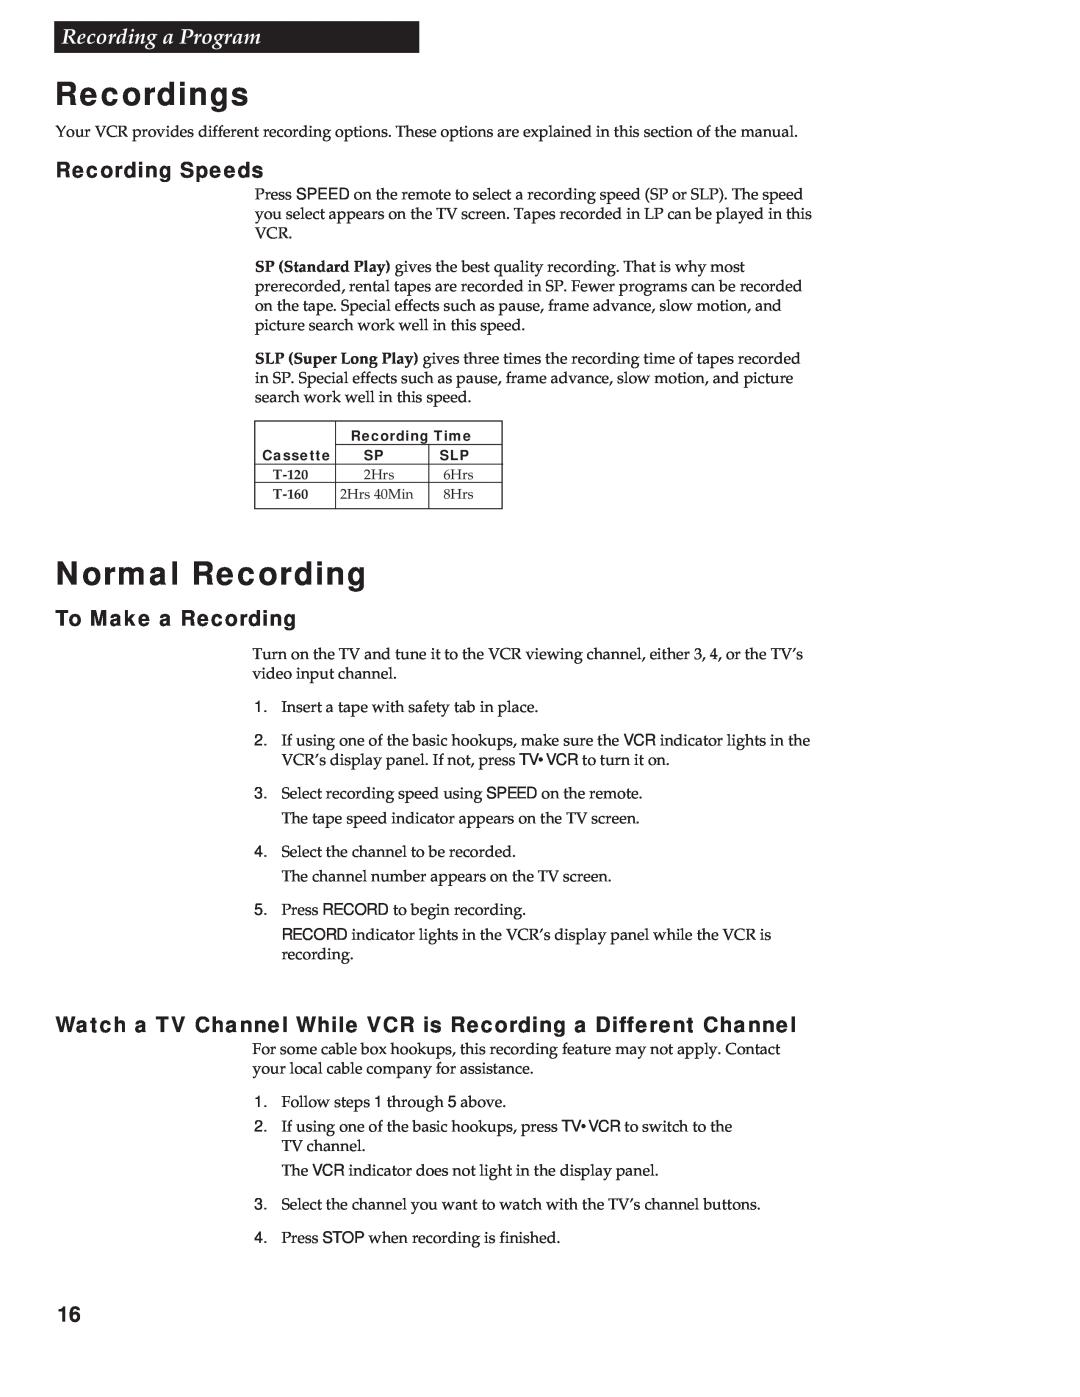 RCA VR336 manual Recordings, Normal Recording, Recording a Program, Recording Speeds, To Make a Recording 